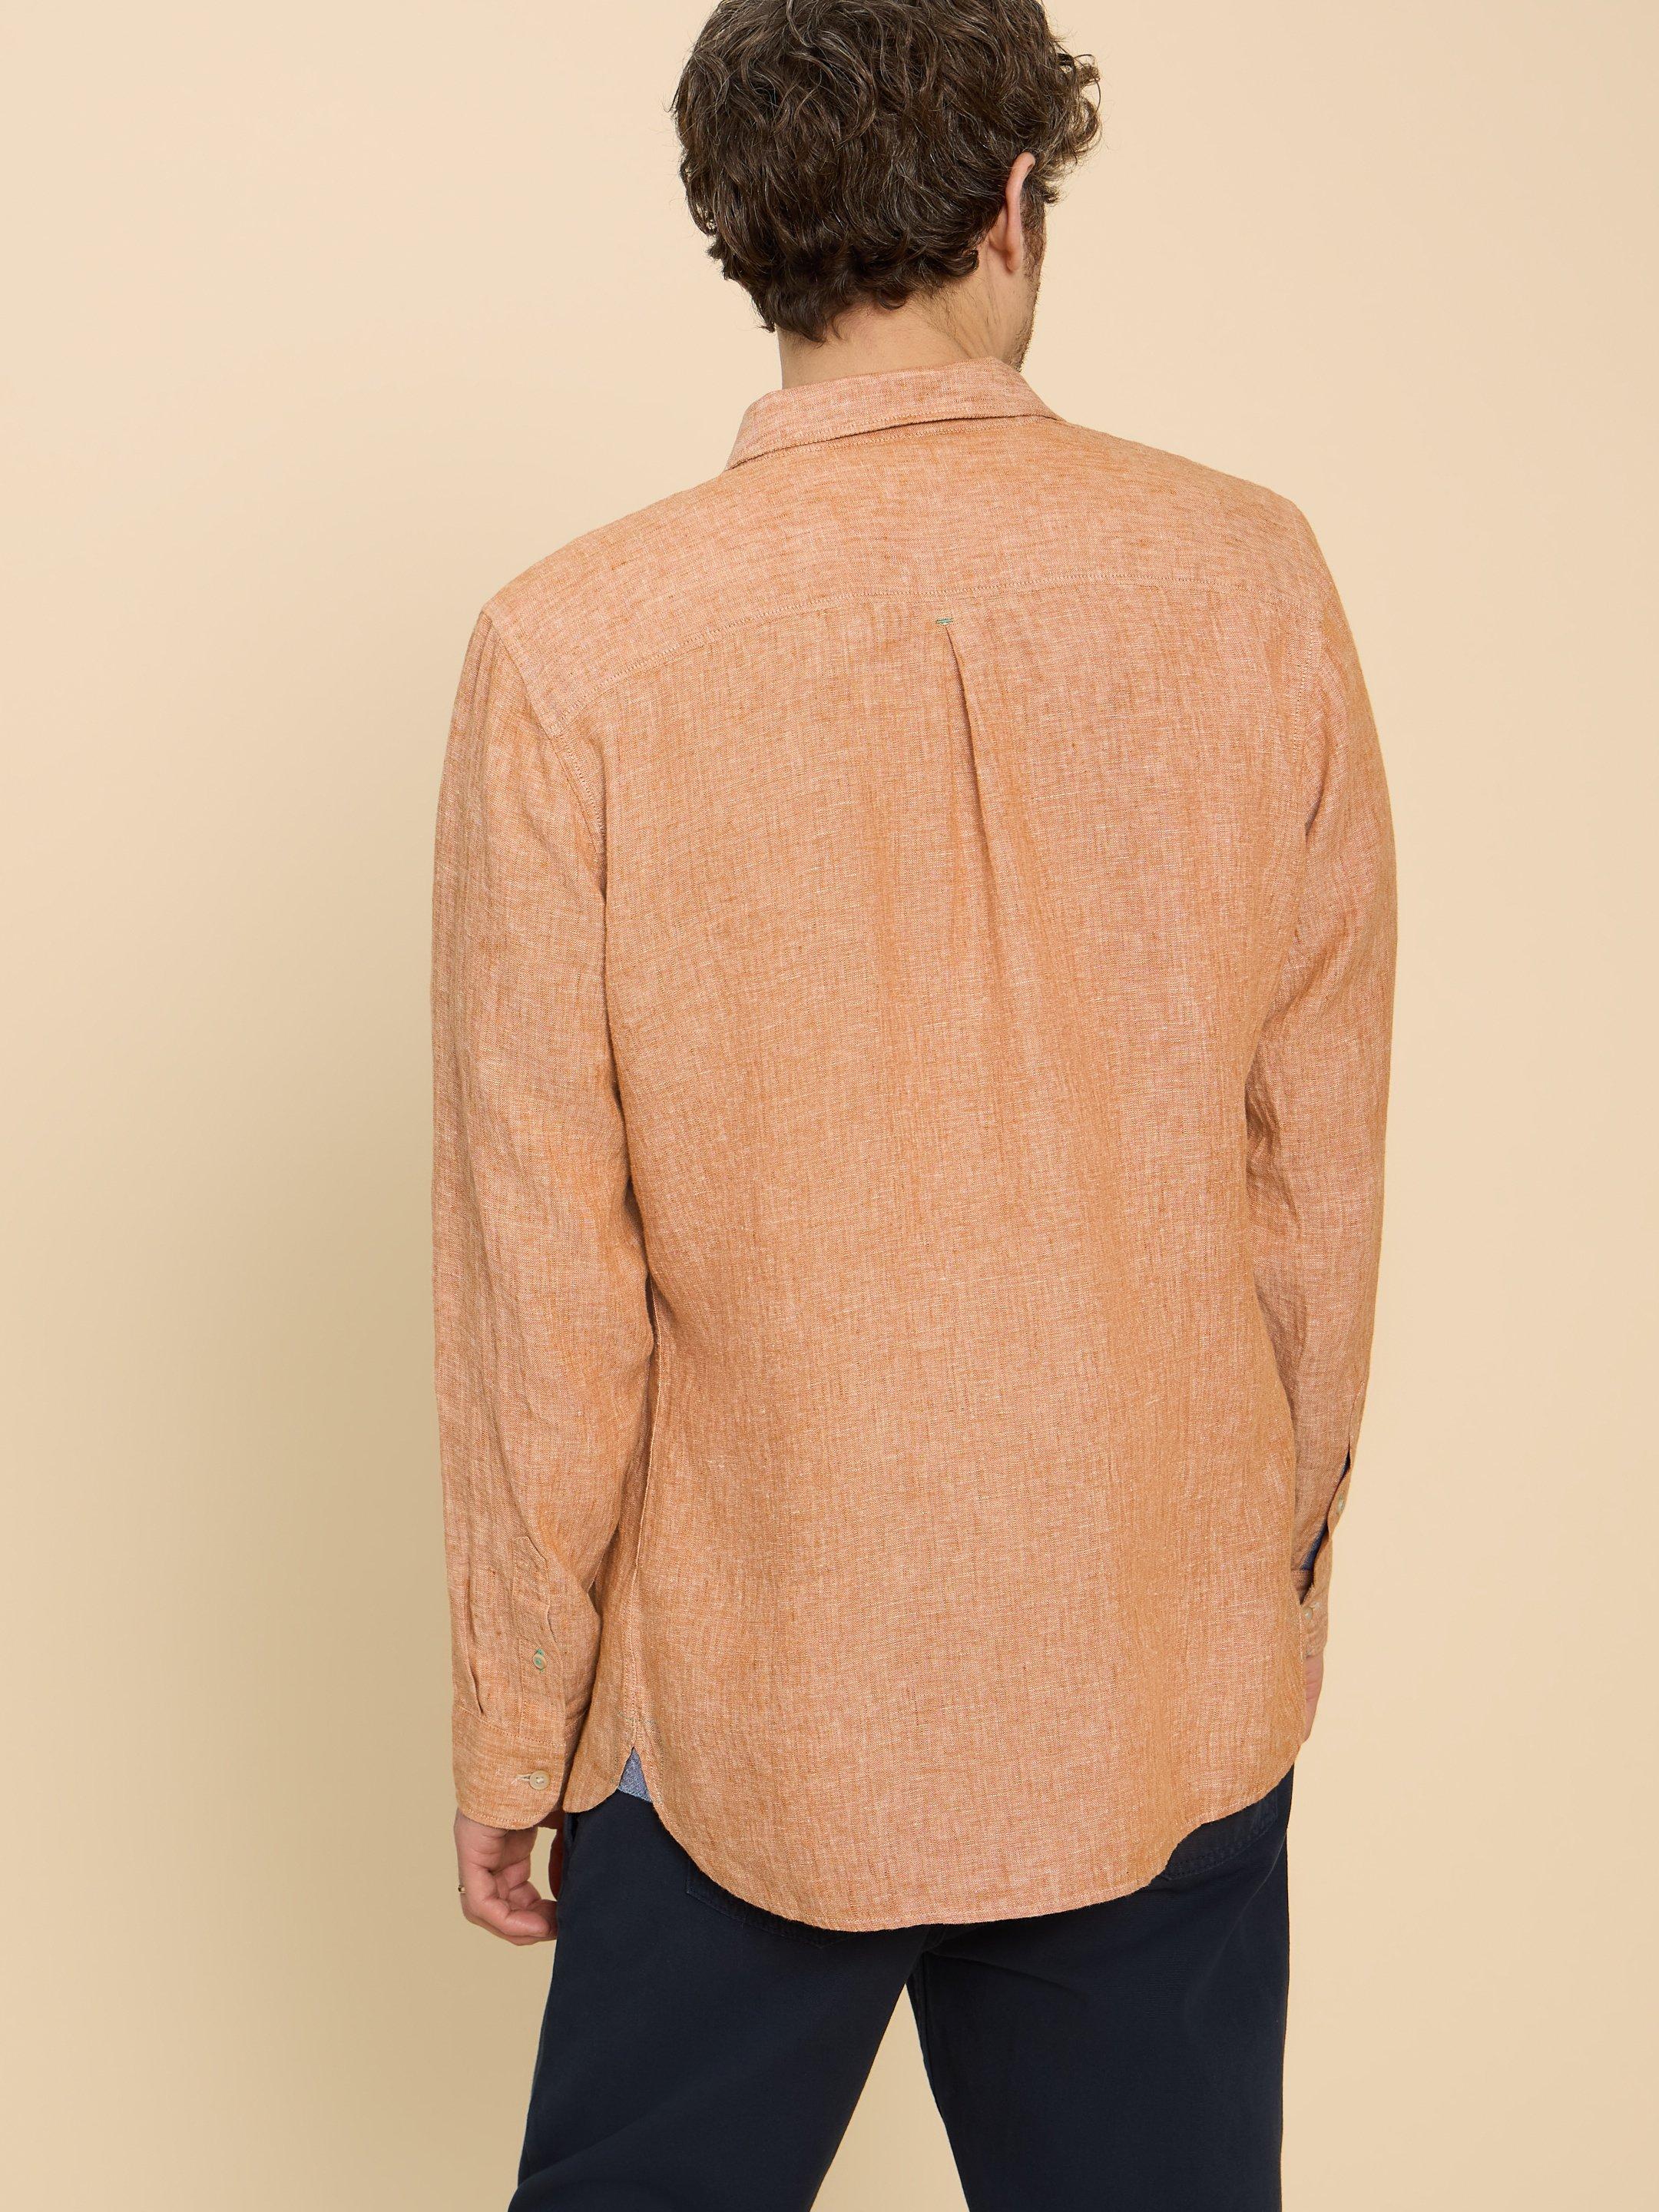 Pembroke LS Linen Shirt in DK ORANGE - MODEL BACK